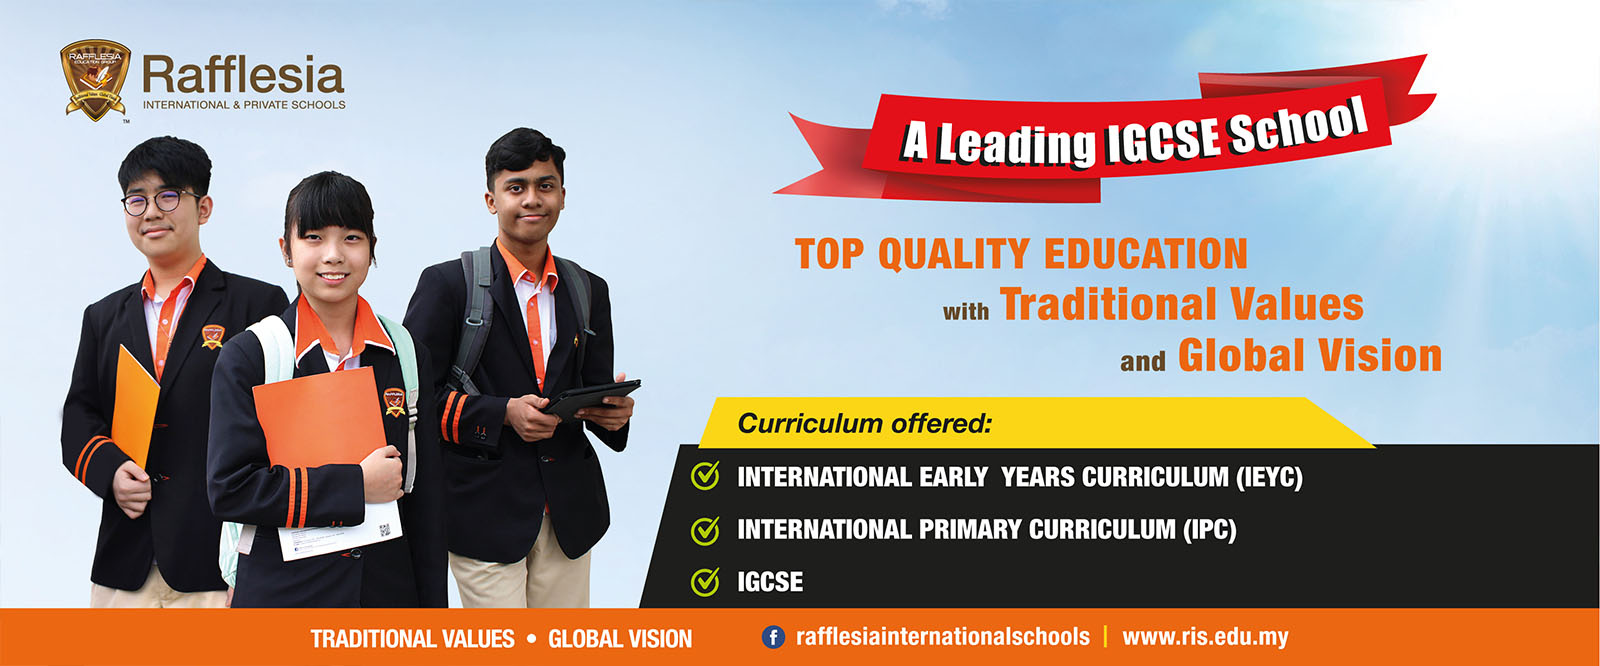 Rafflesia International School Kajang Campus provides top quality education